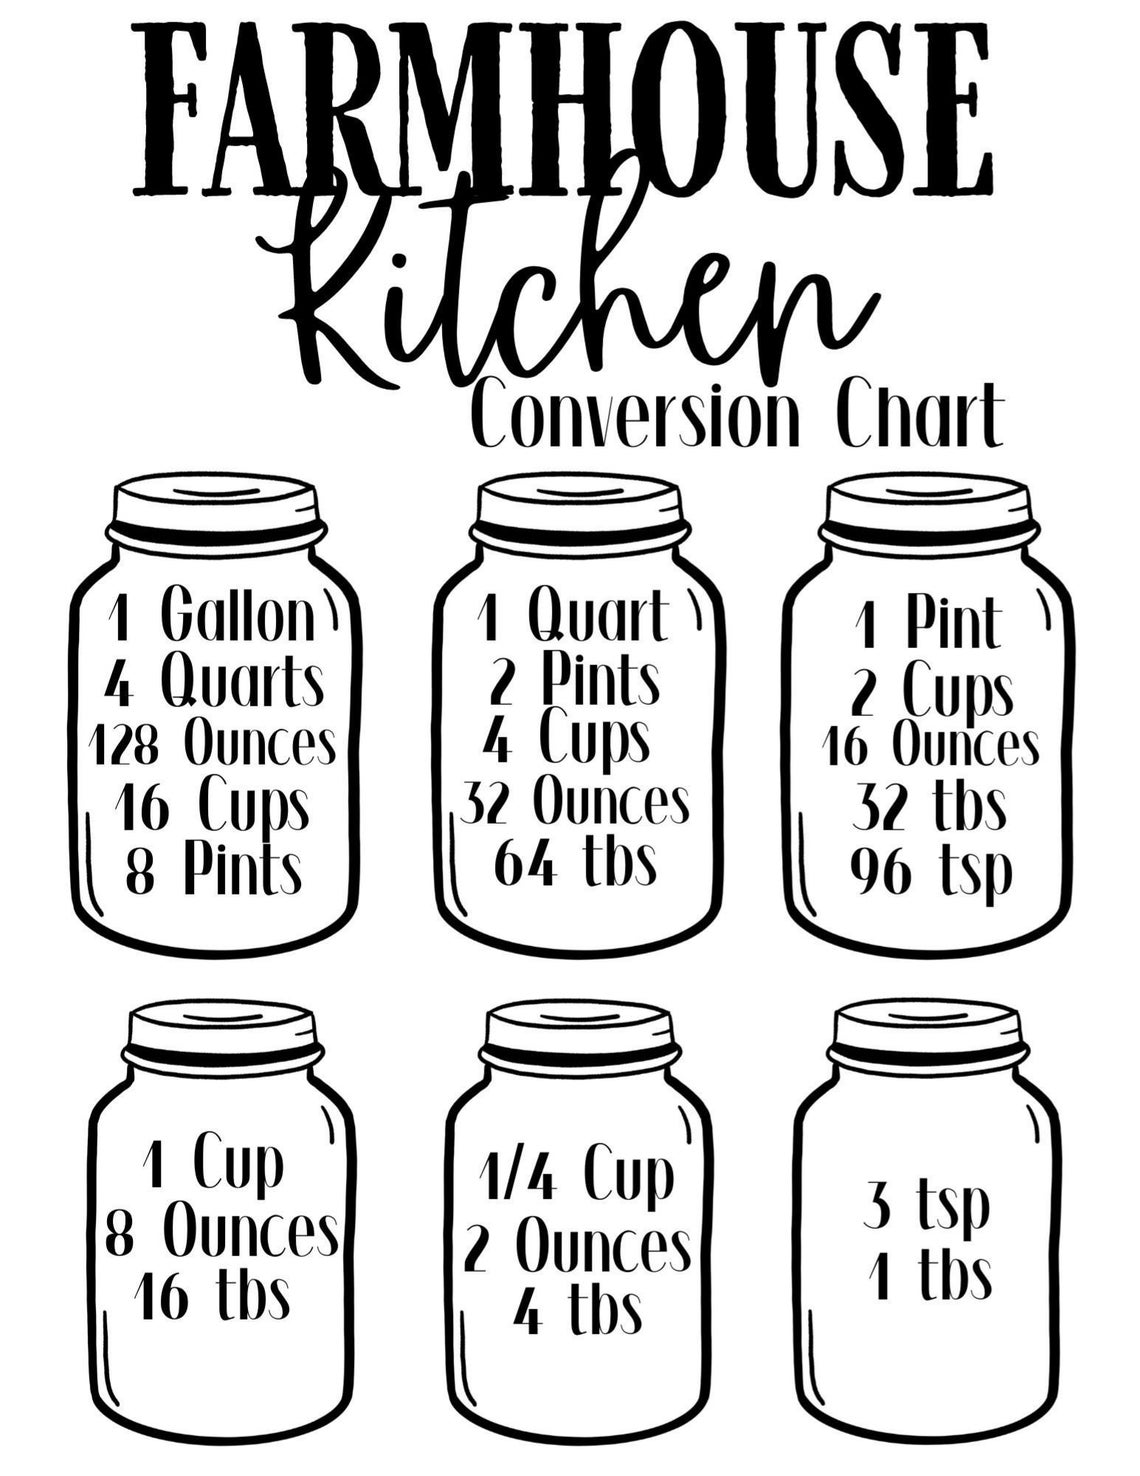 Farmhouse Kitchen Conversion Chart Jpg